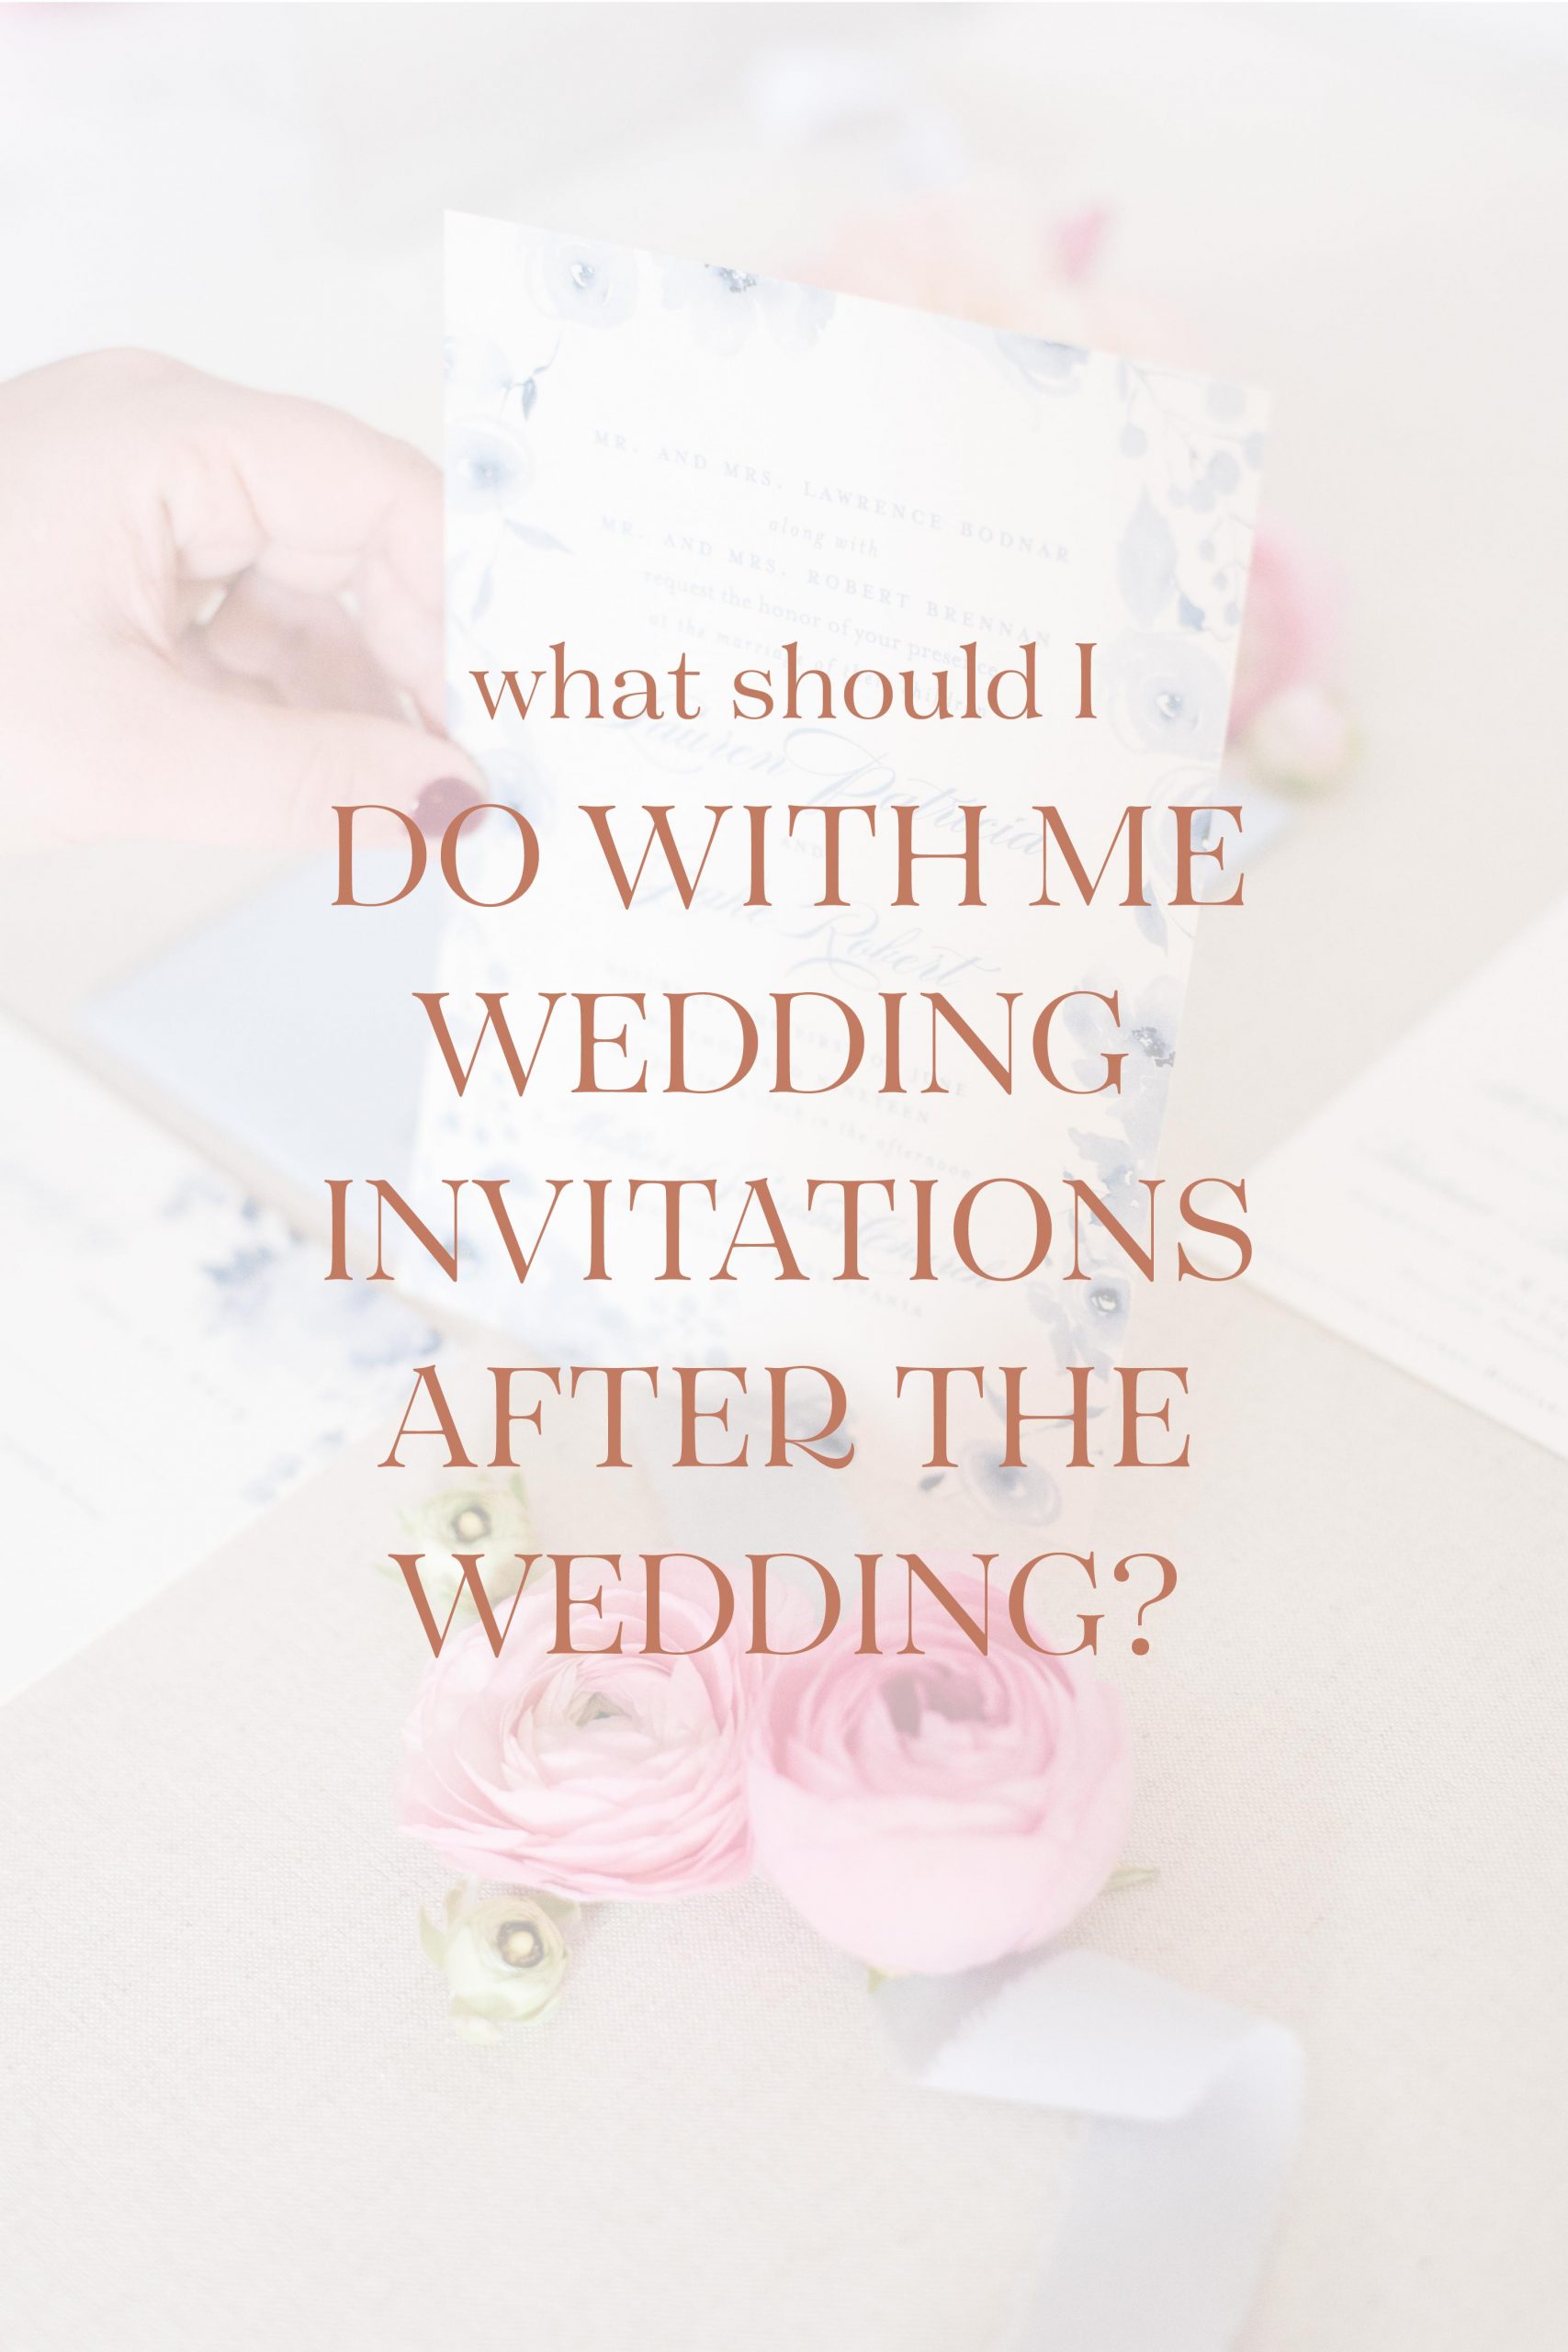 6 ways to preserve your wedding invitations